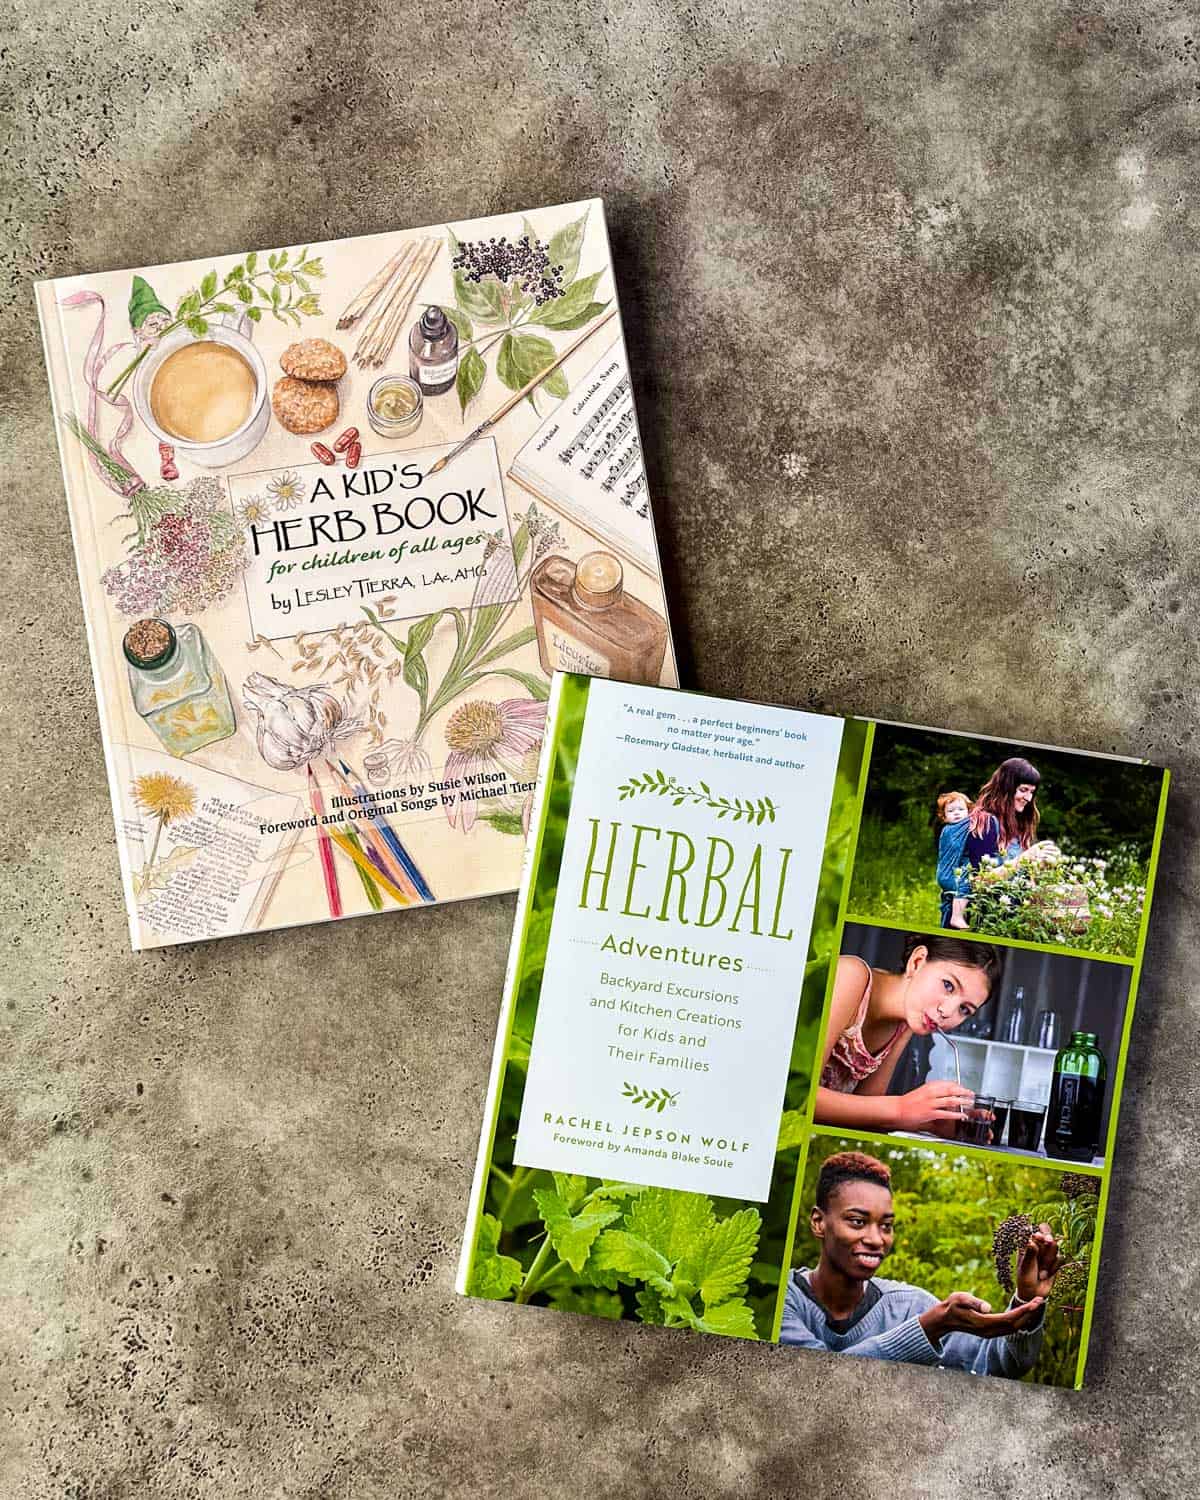 2 herbal books for kids. 